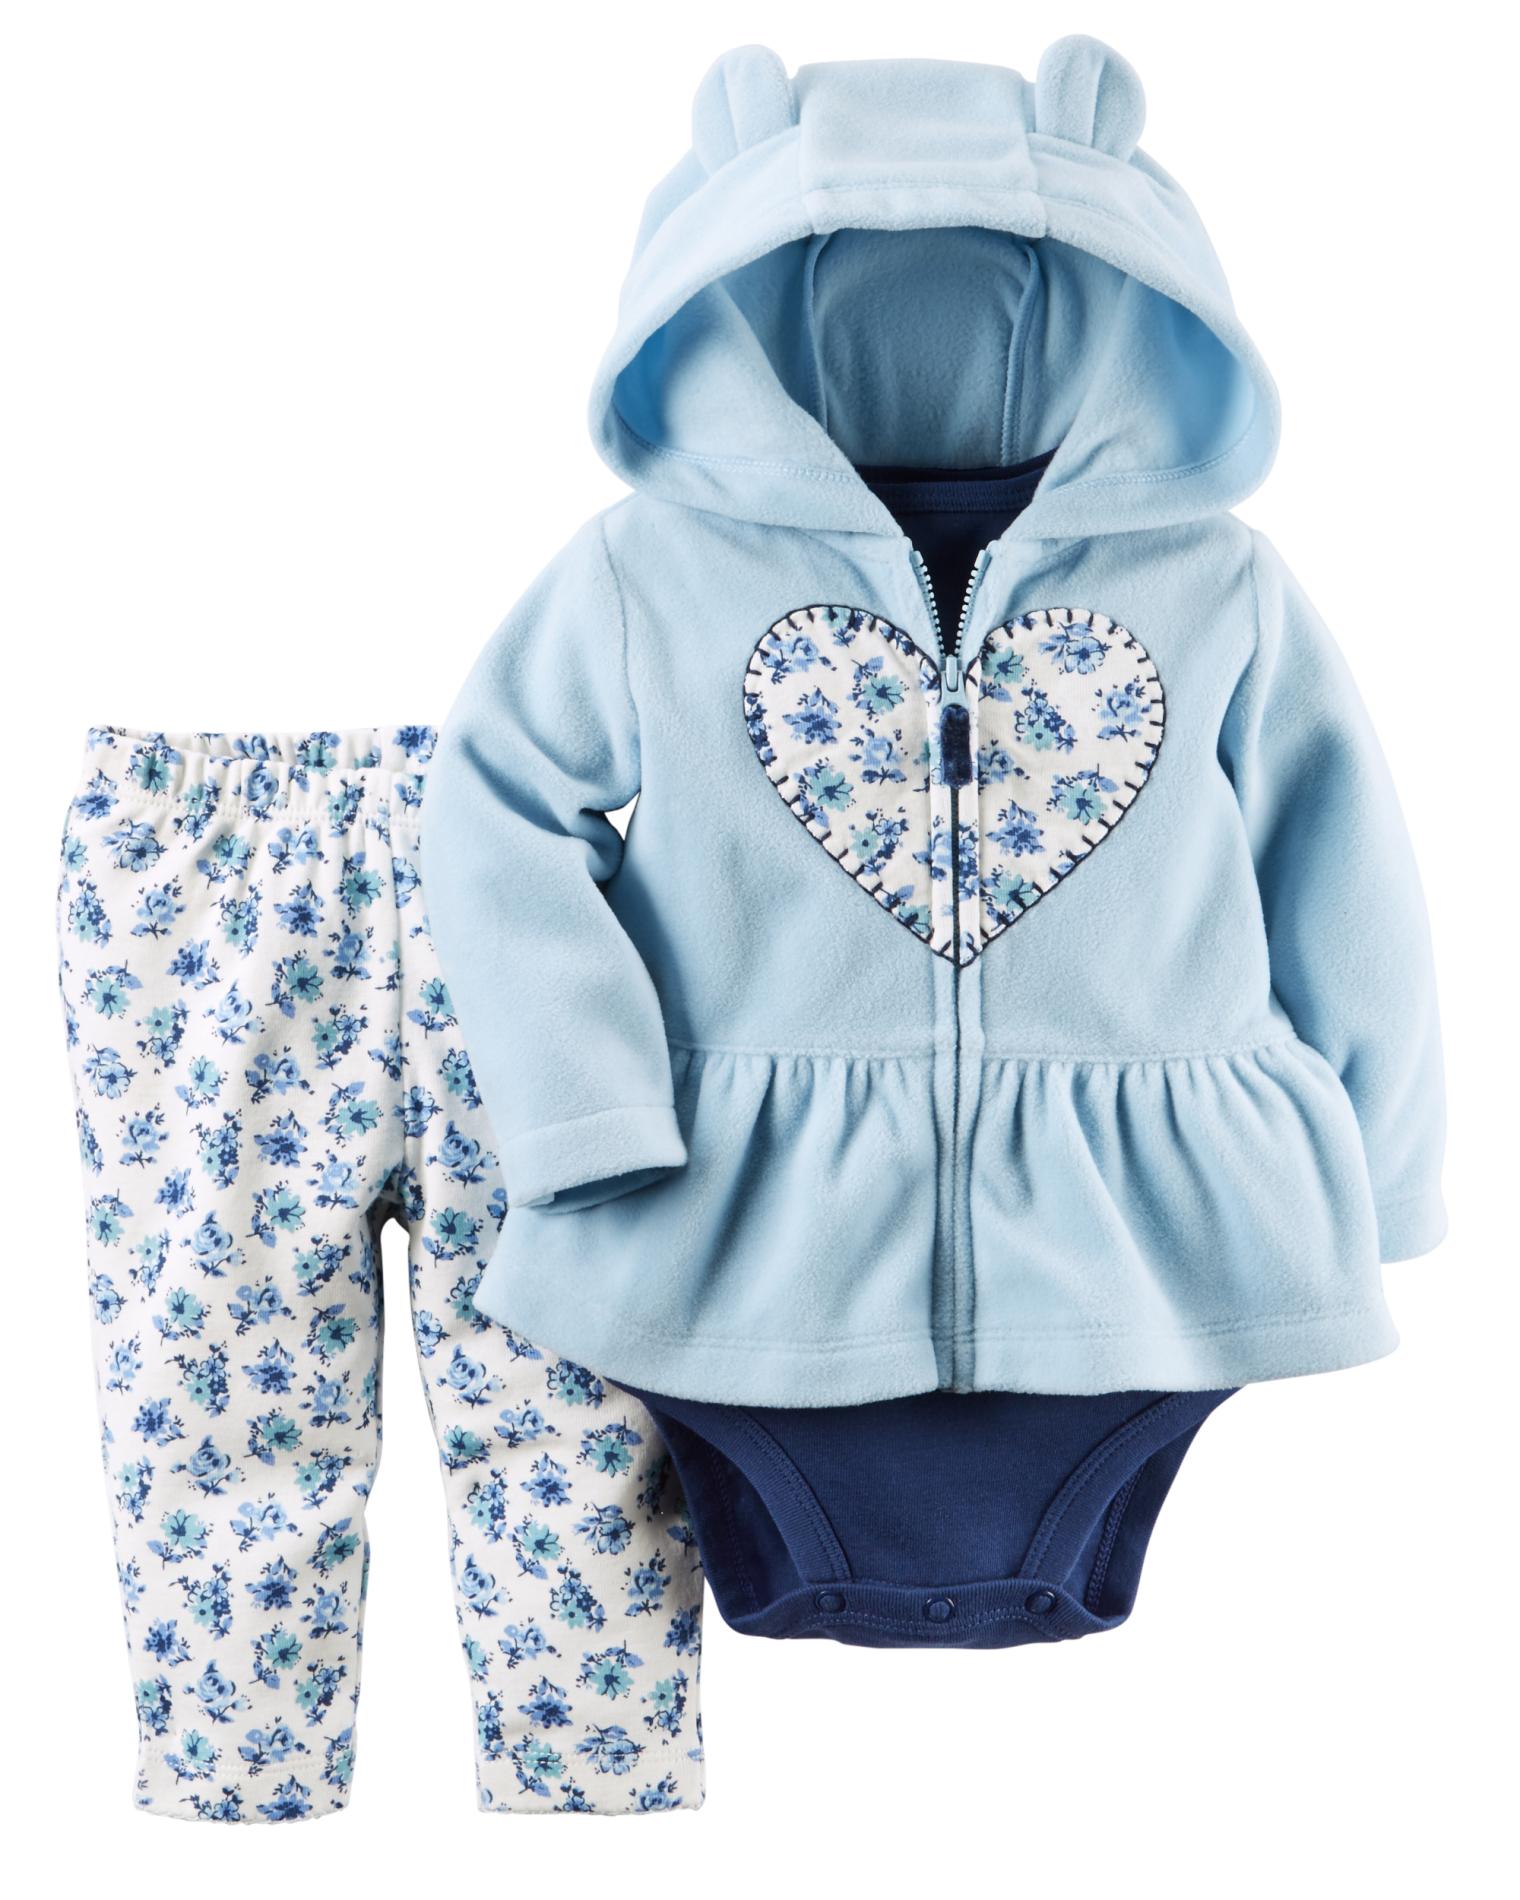 Carter's Newborn & Infant Girls' Hoodie Jacket, Bodysuit & Leggings - Floral